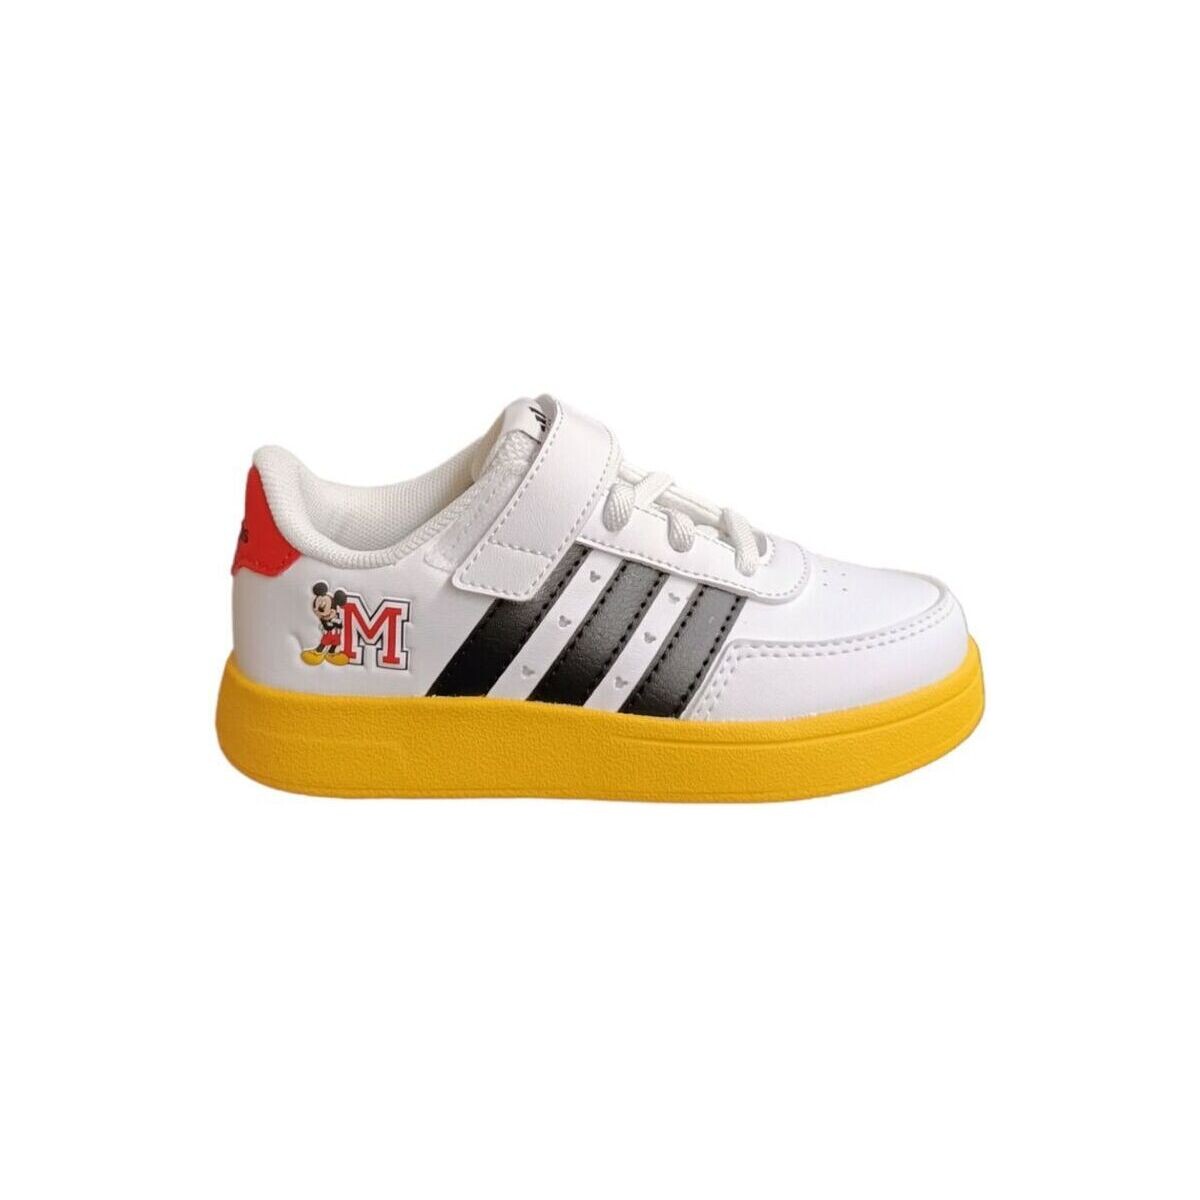 Schuhe Kinder Sneaker adidas Originals BREAKNET MICKEY Multicolor